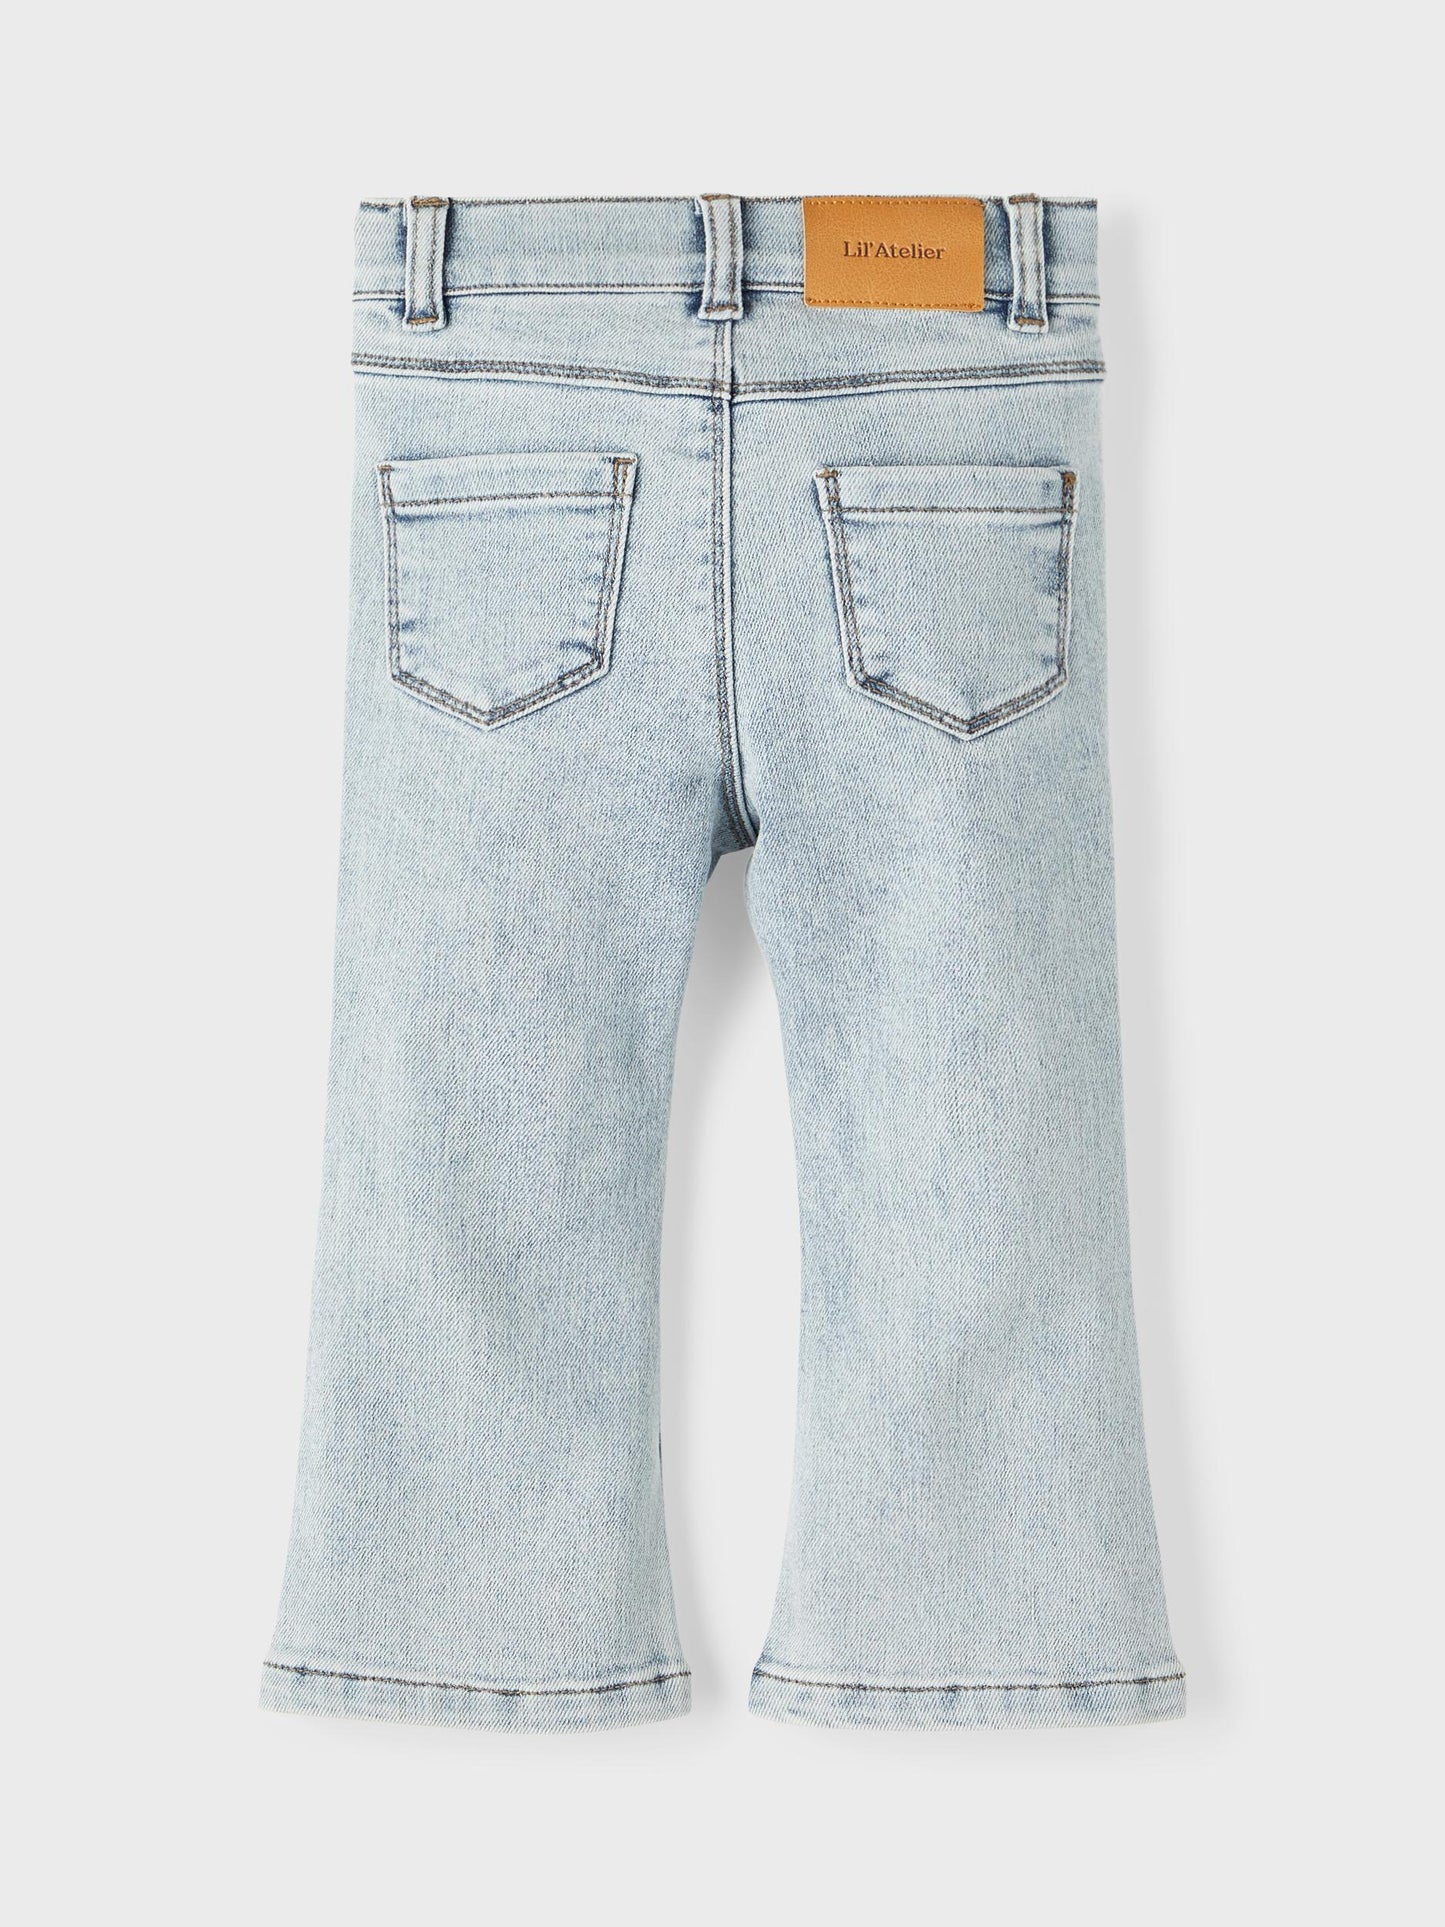 Ljusblå korta jeans